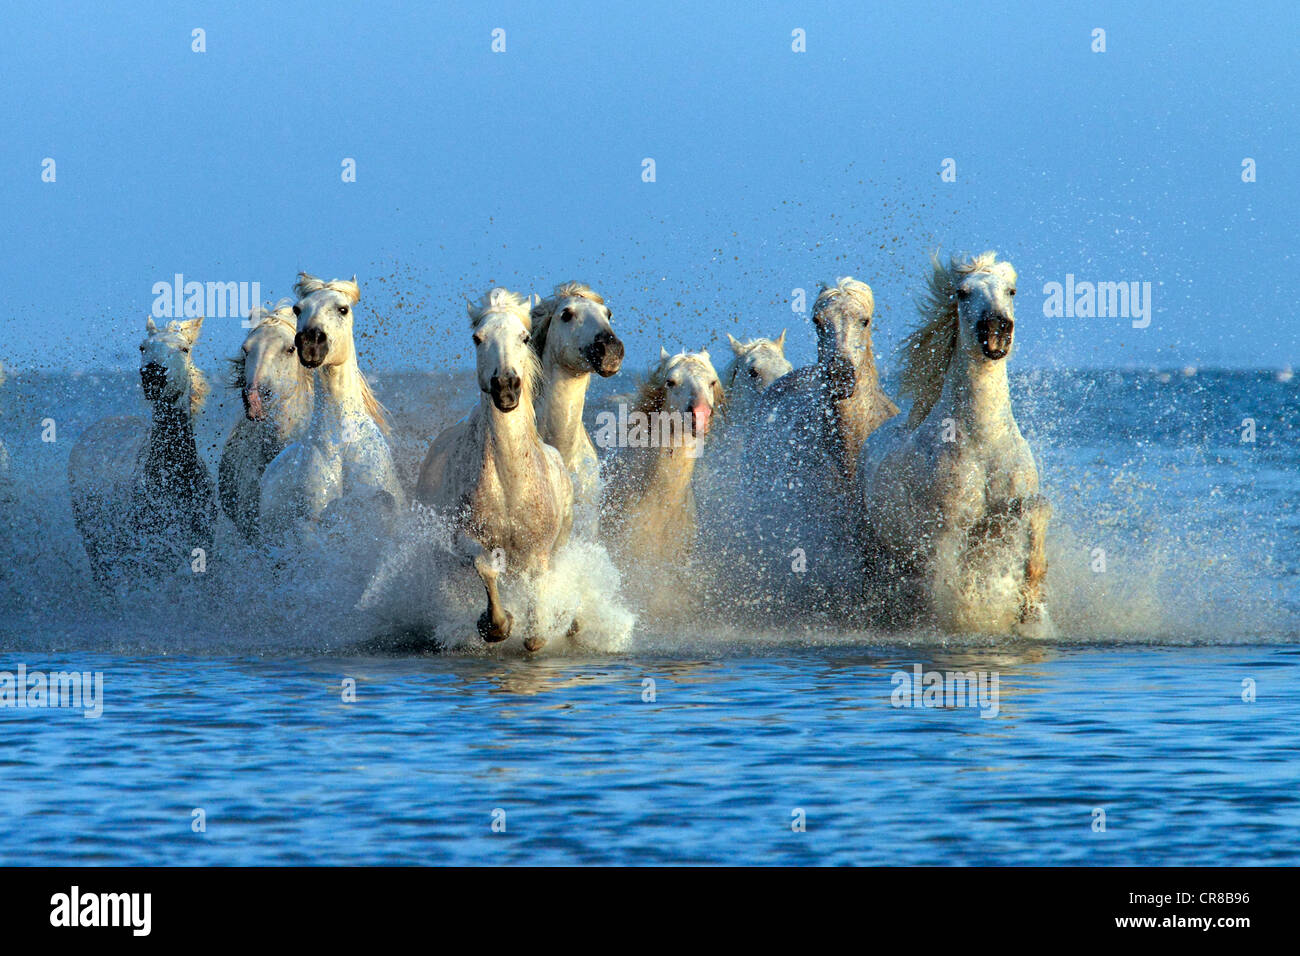 Cavalli Camargue (Equus caballus), allevamento gallopping attraverso acqua, Saintes-Marie-de-la-Mer, Camargue, Francia, Europa Foto Stock